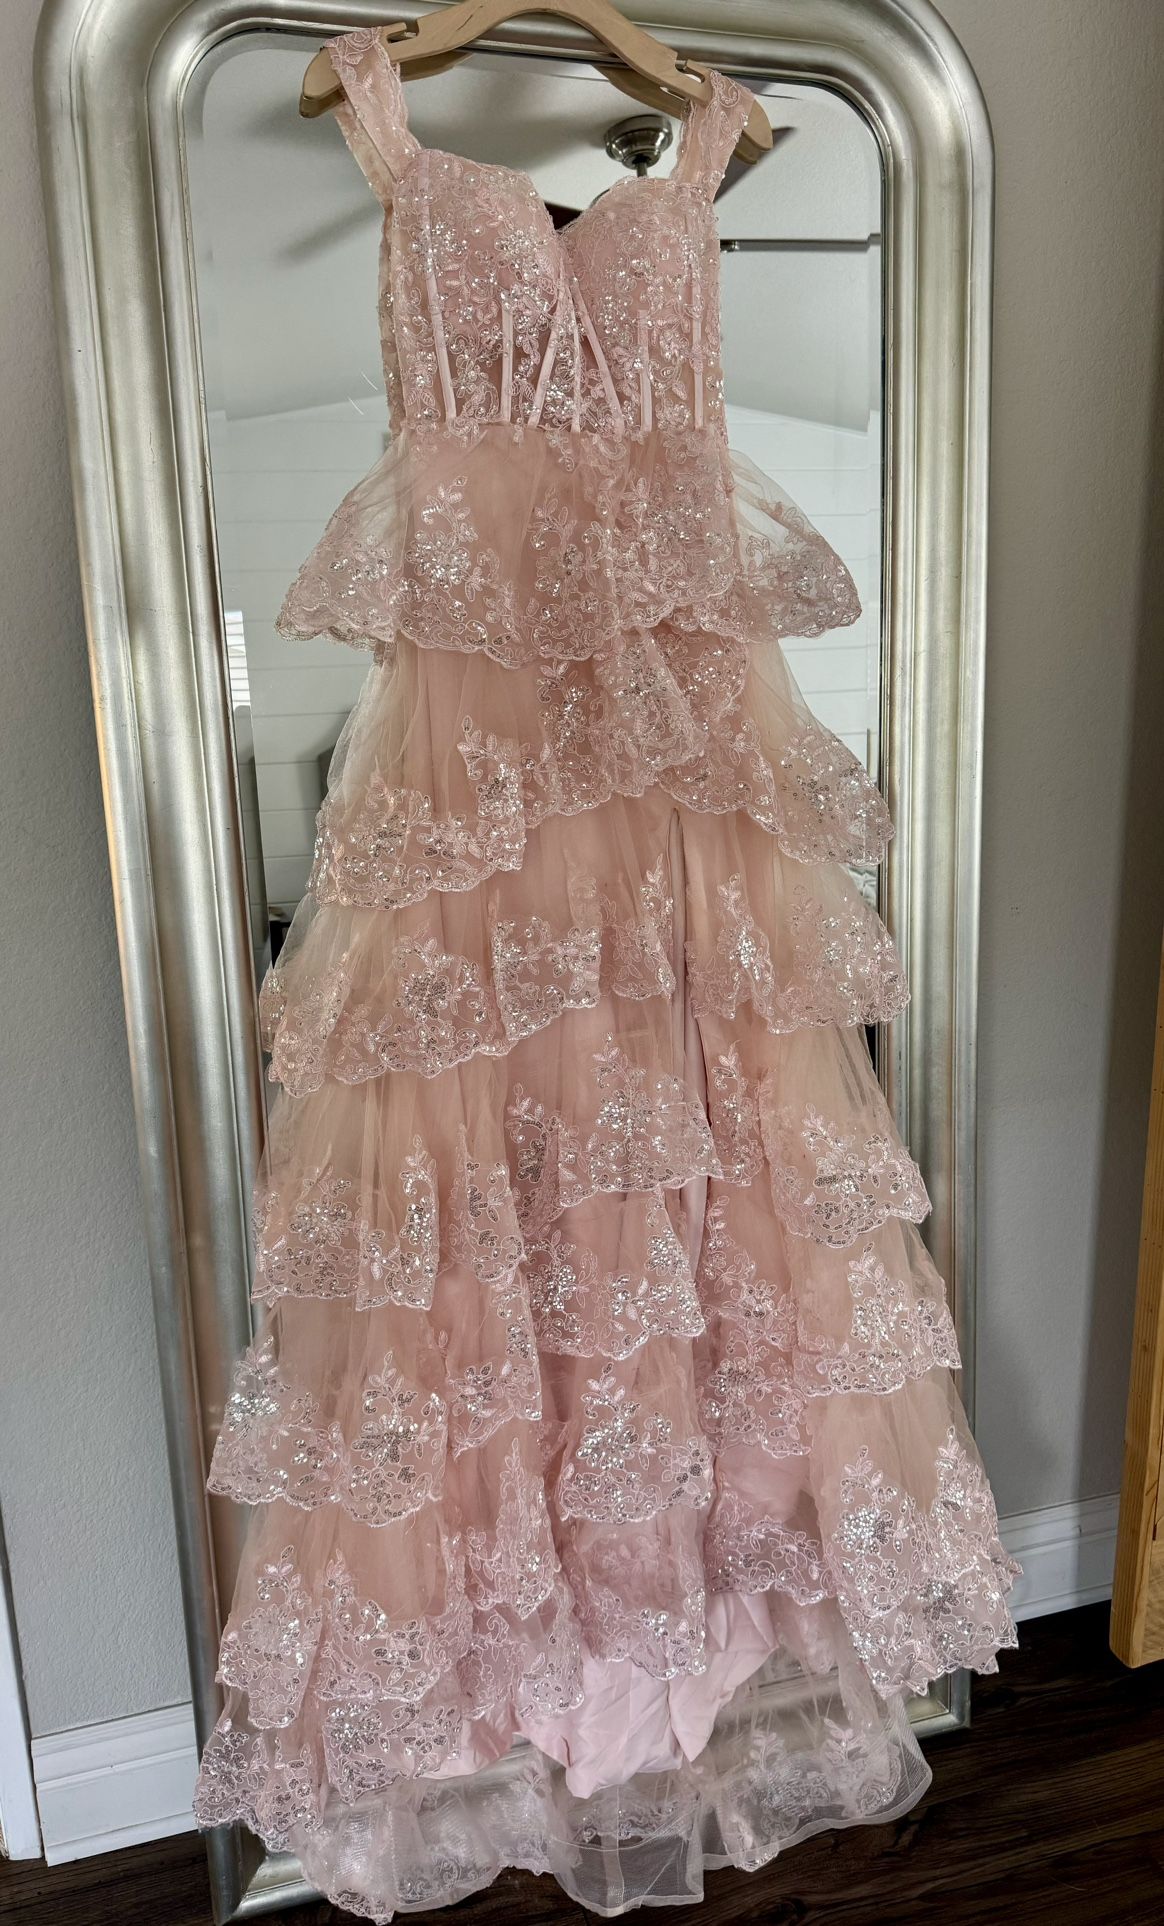 New, Never Worn Prom Dress